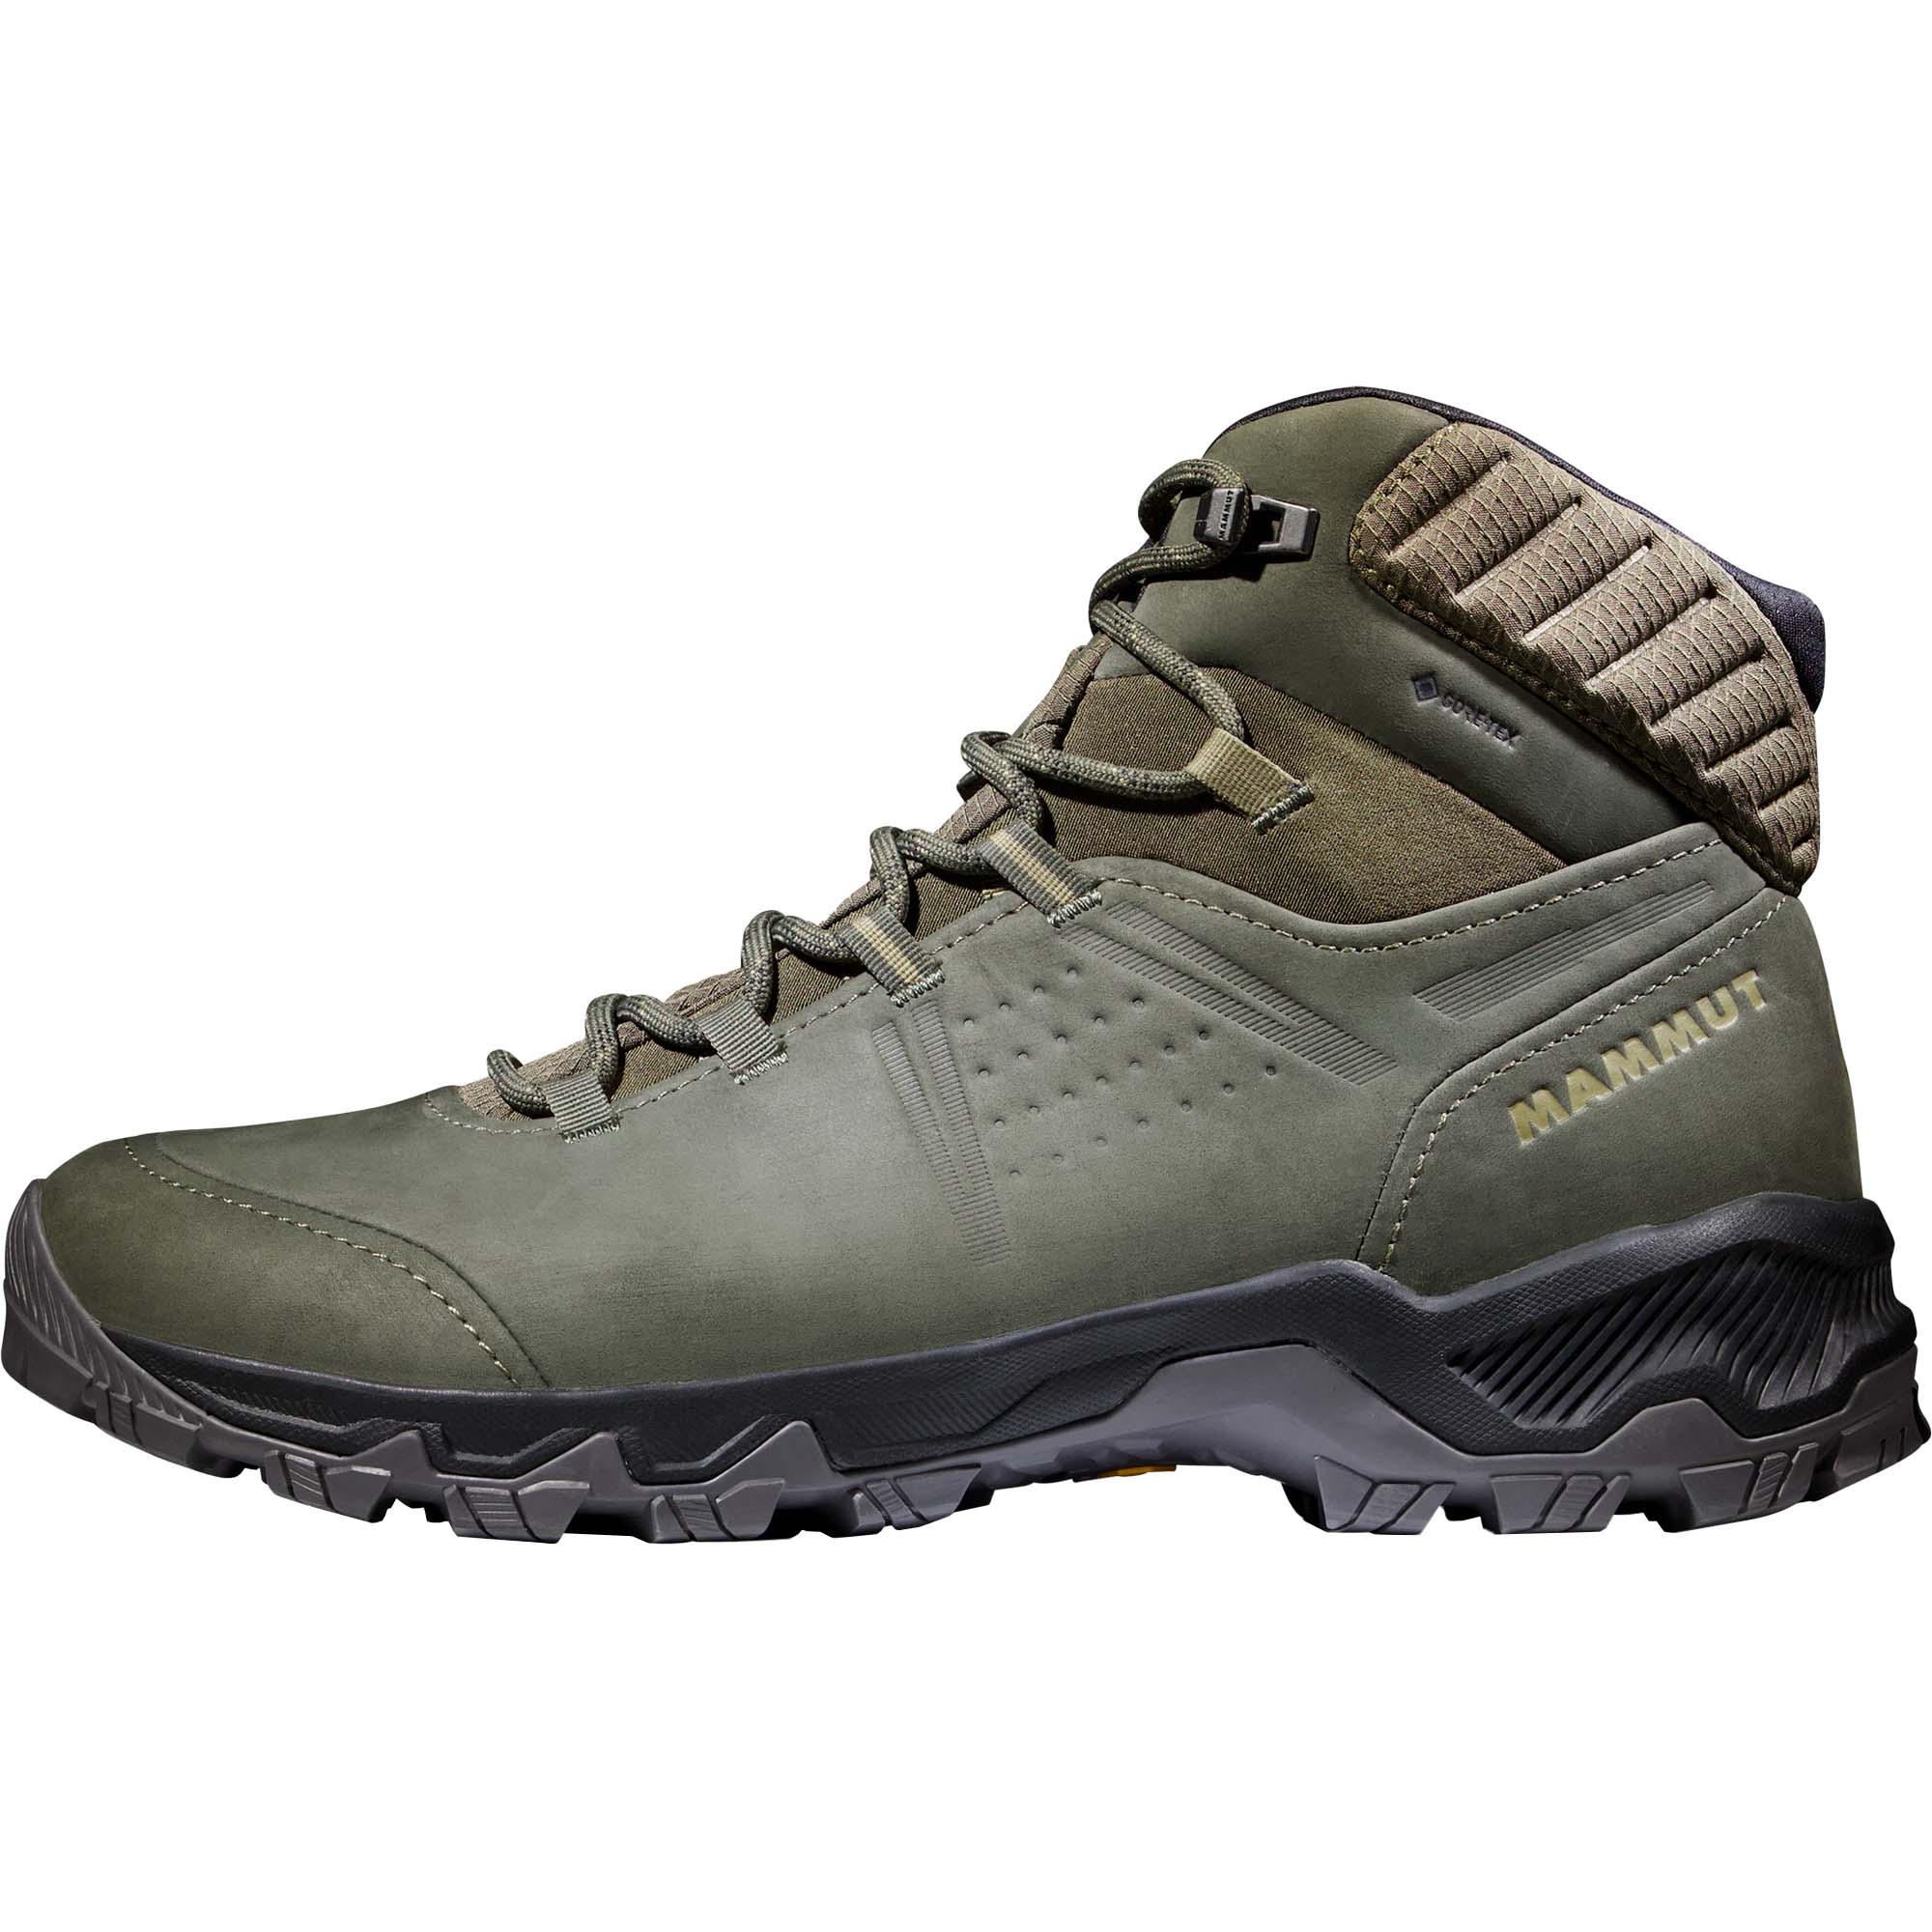 Mammut Mercury IV Mid GTX Men's Hiking Shoes